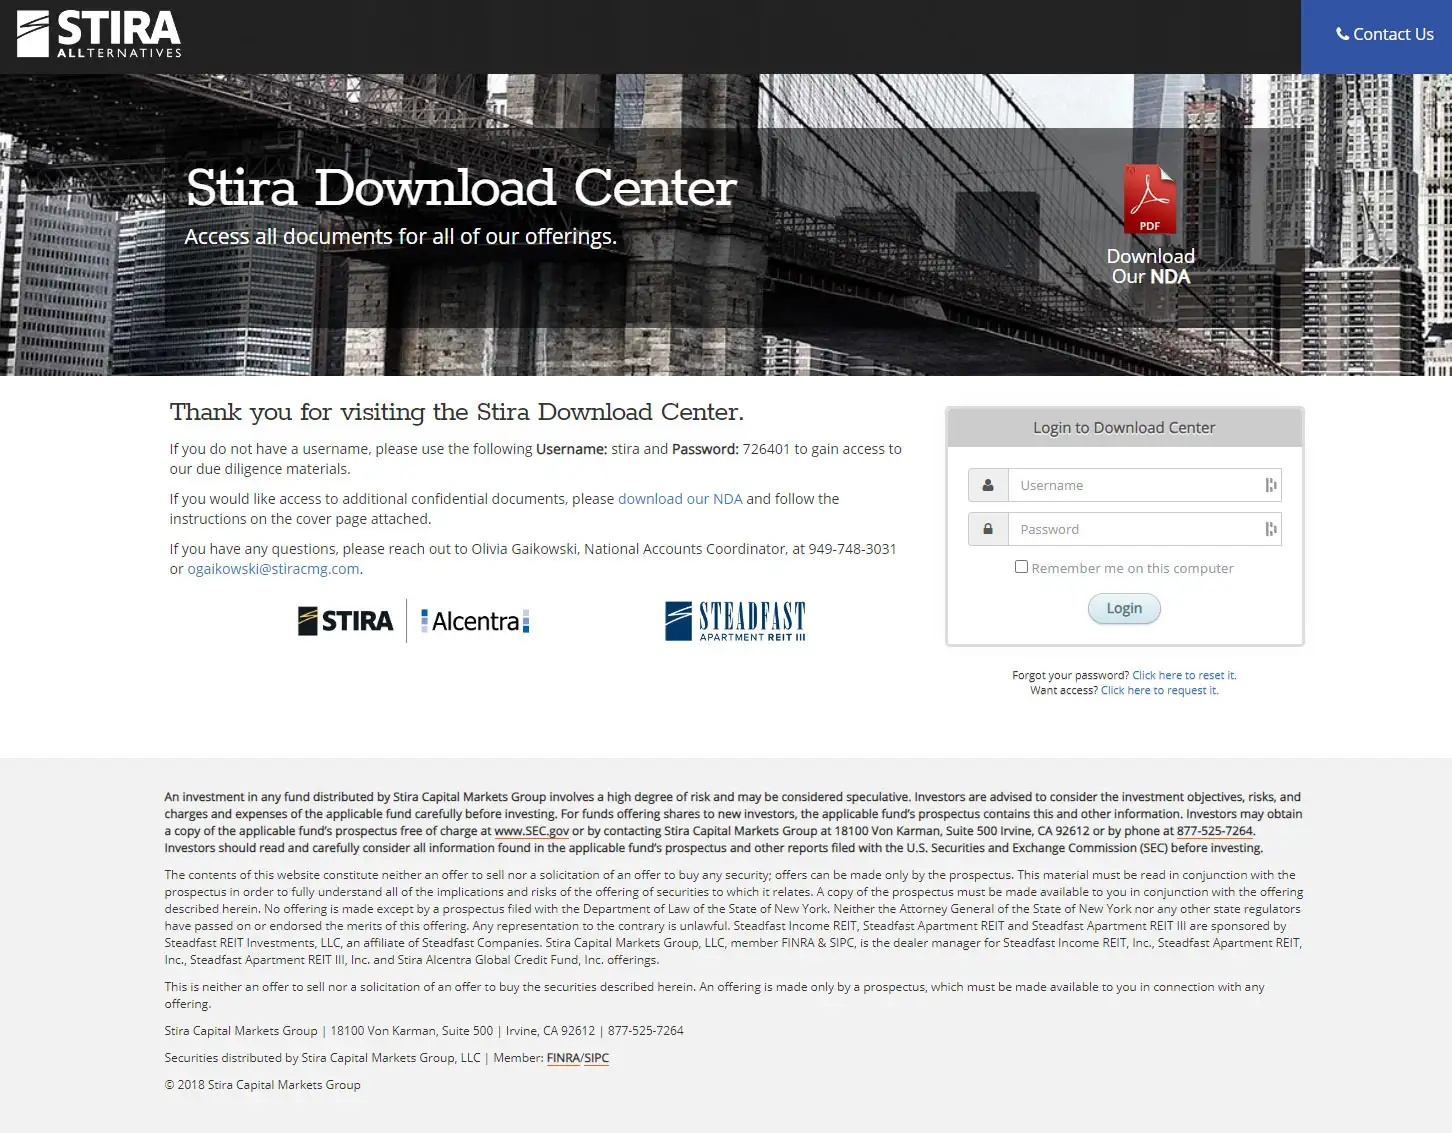 STIRA - Wordpress Website - Custom Download Center